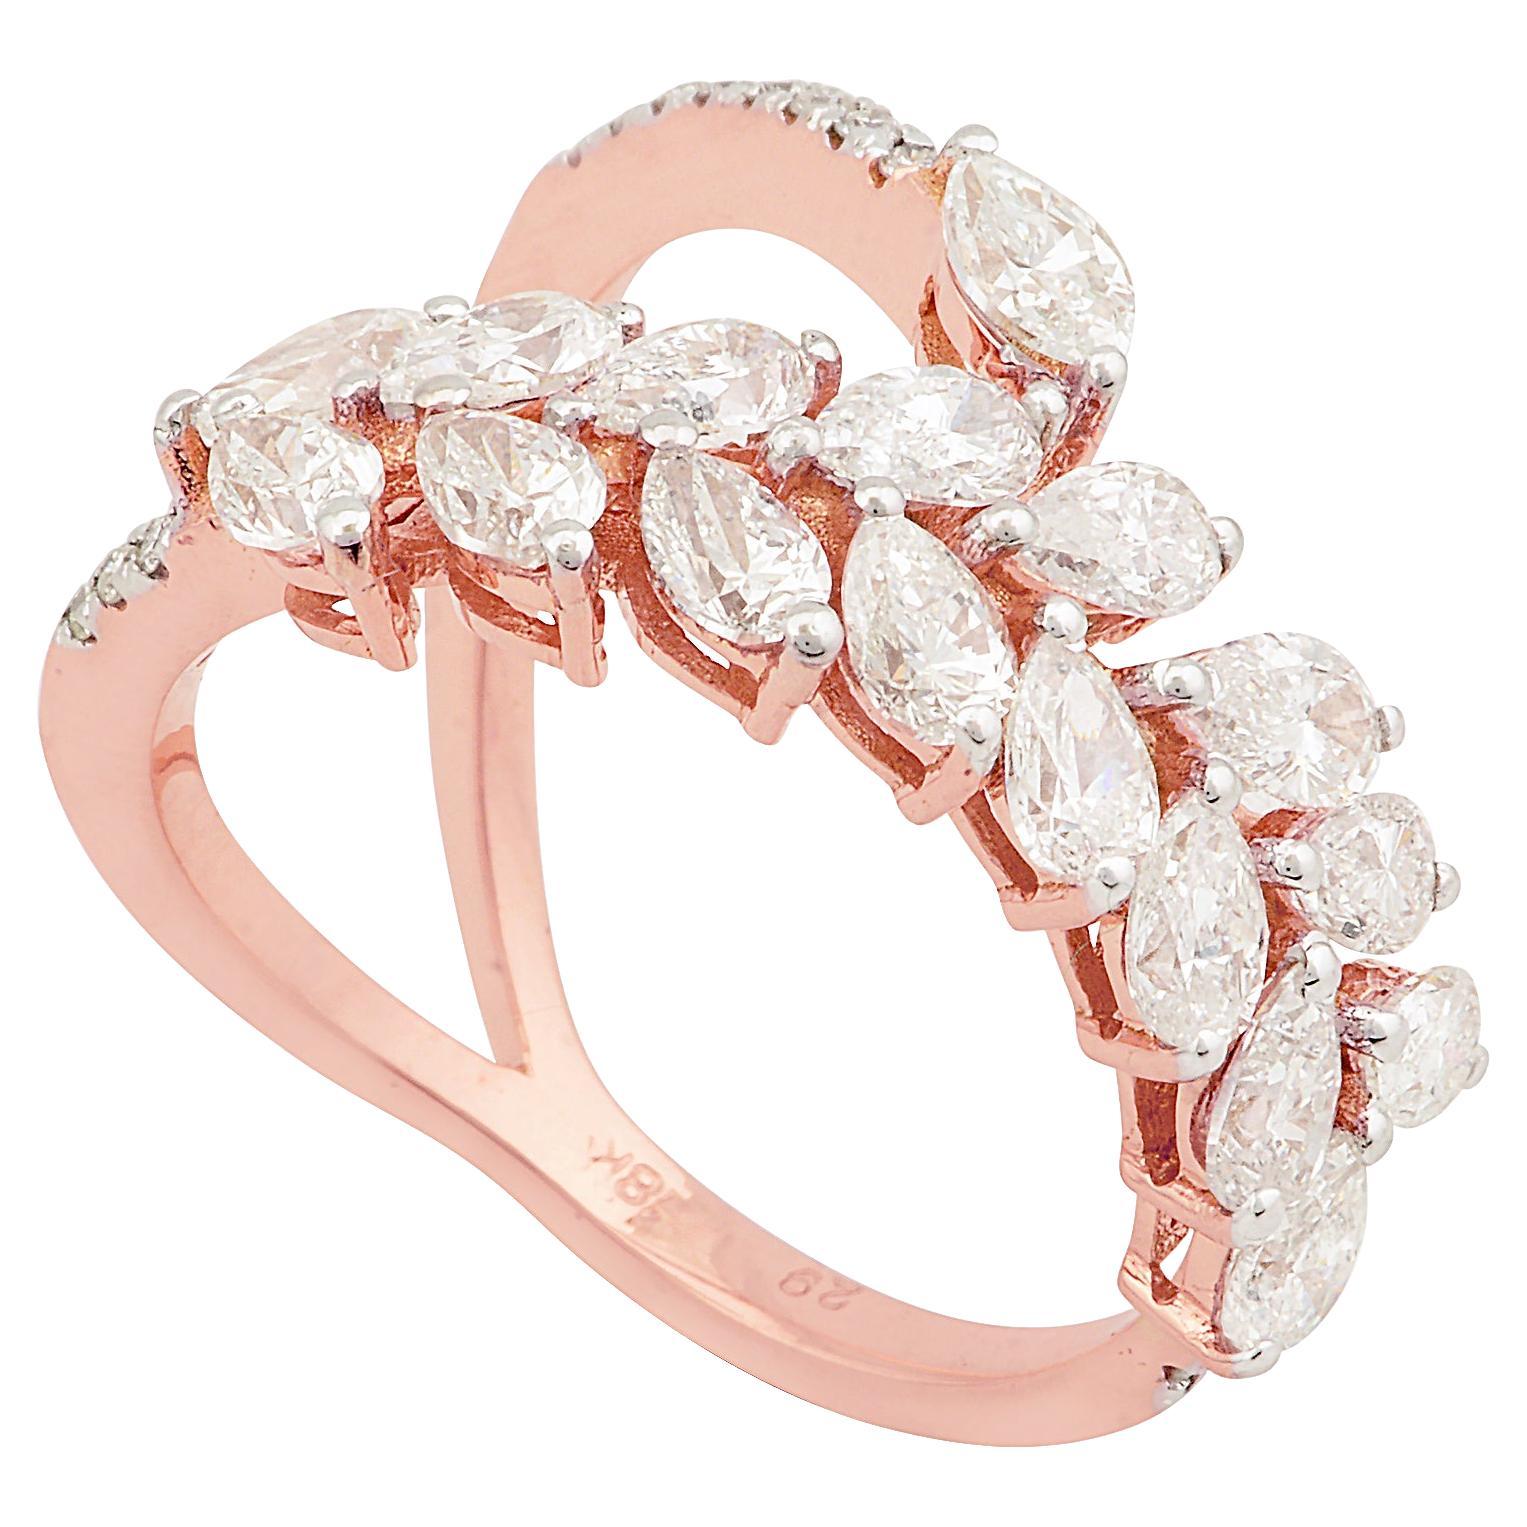 For Sale:  2 Ct. SI Clarity HI Color Pear Marquise Diamond Designer Ring 18 Karat Rose Gold